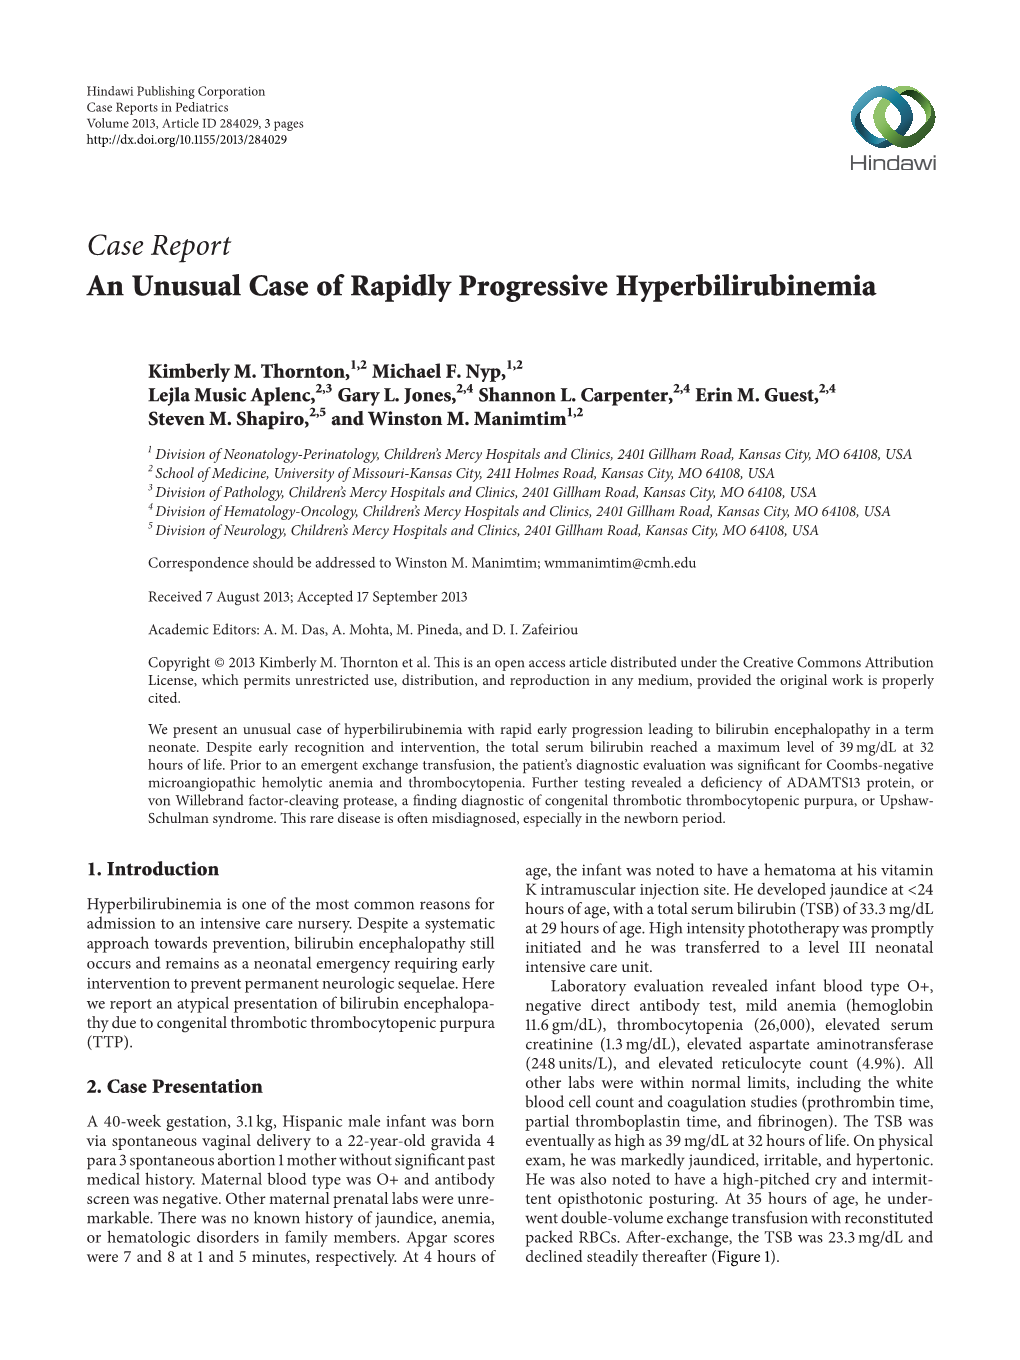 An Unusual Case of Rapidly Progressive Hyperbilirubinemia